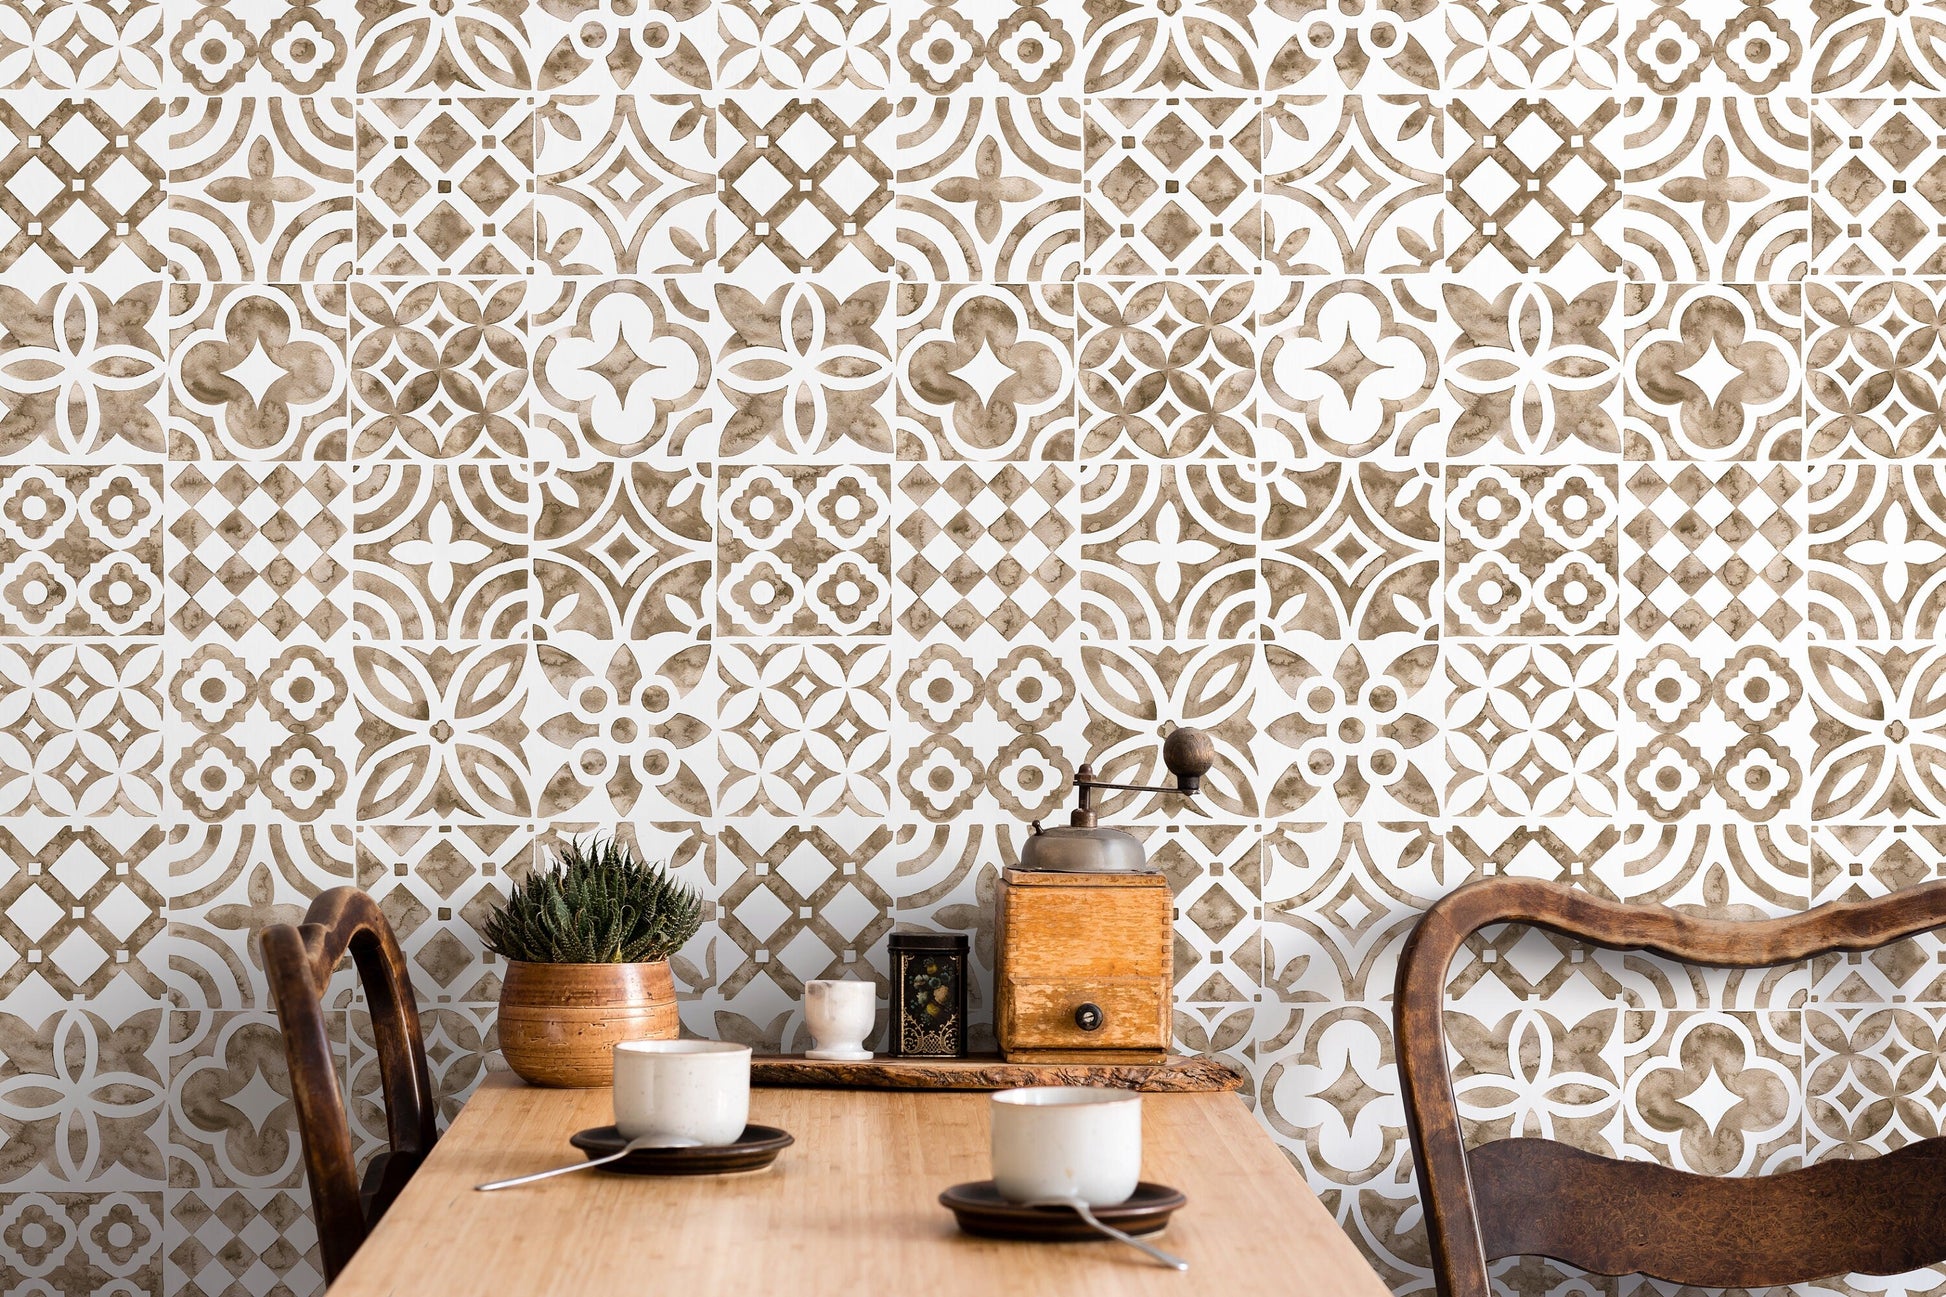 Beige Tile Wallpaper / Peel and Stick Wallpaper Removable Wallpaper Home Decor Wall Art Wall Decor Room Decor - D525